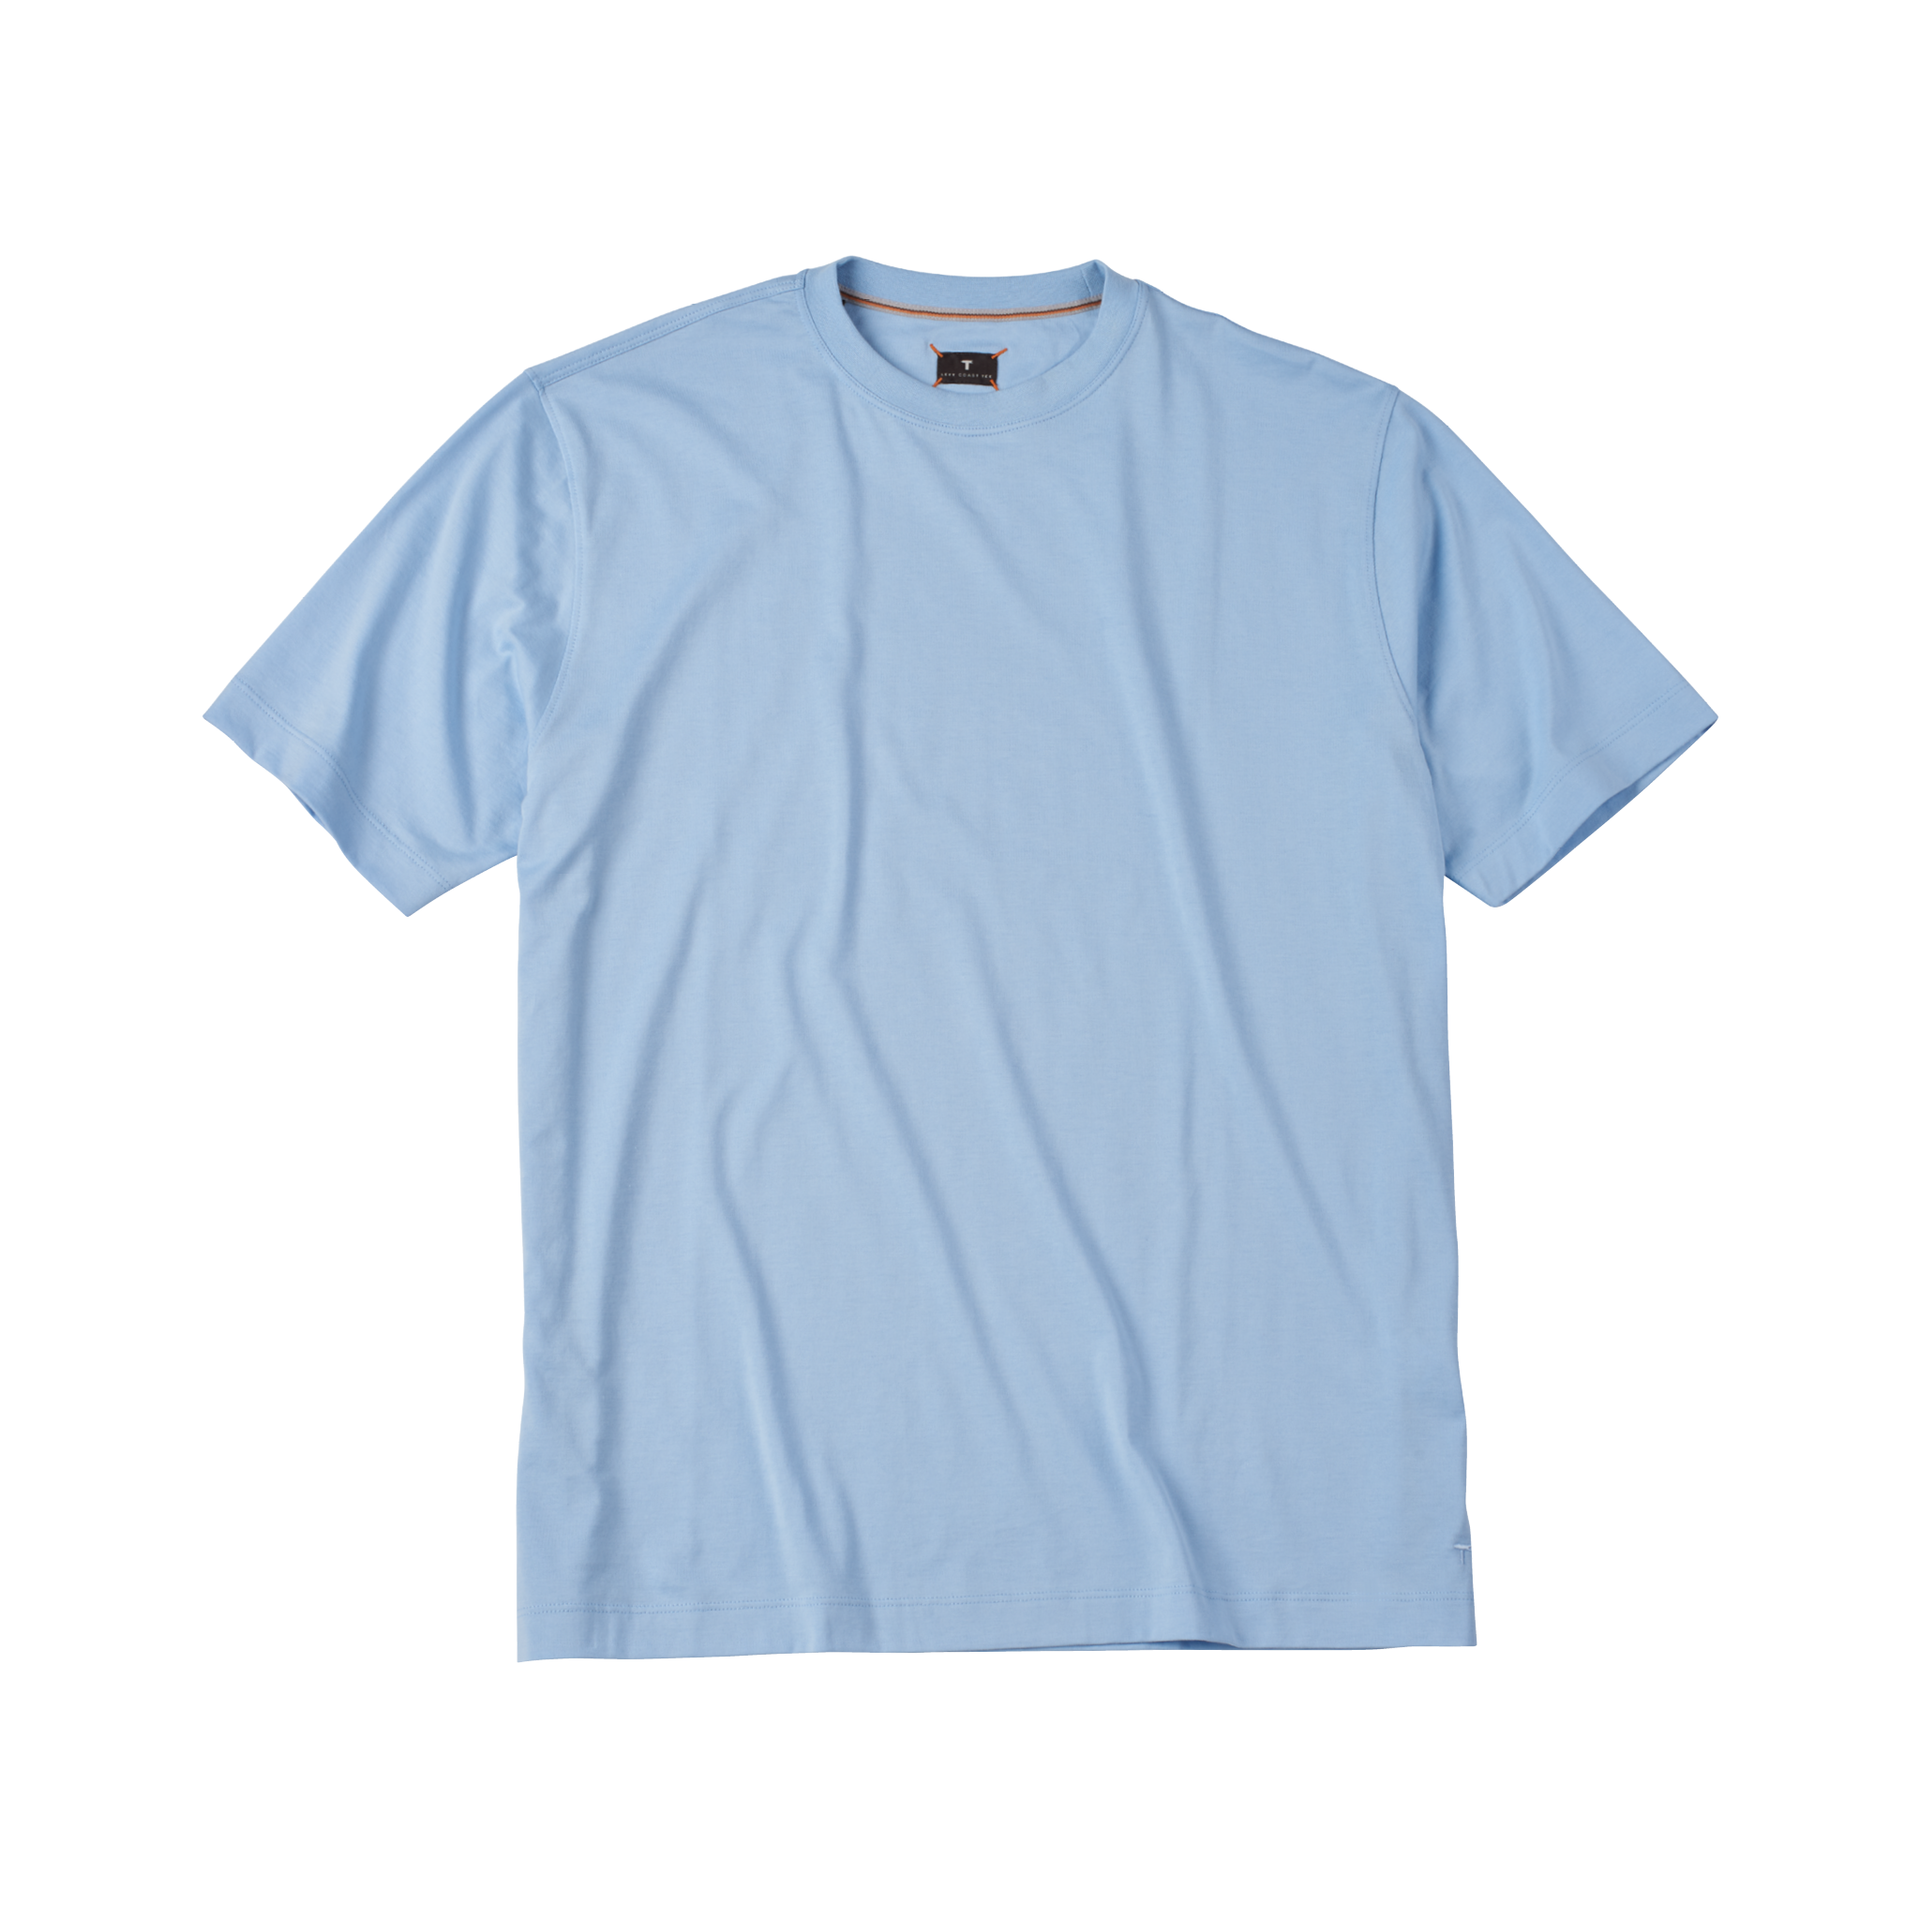 Crew Neck Peruvian Cotton Tee Shirt in Sky Blue by Left Coast Tee